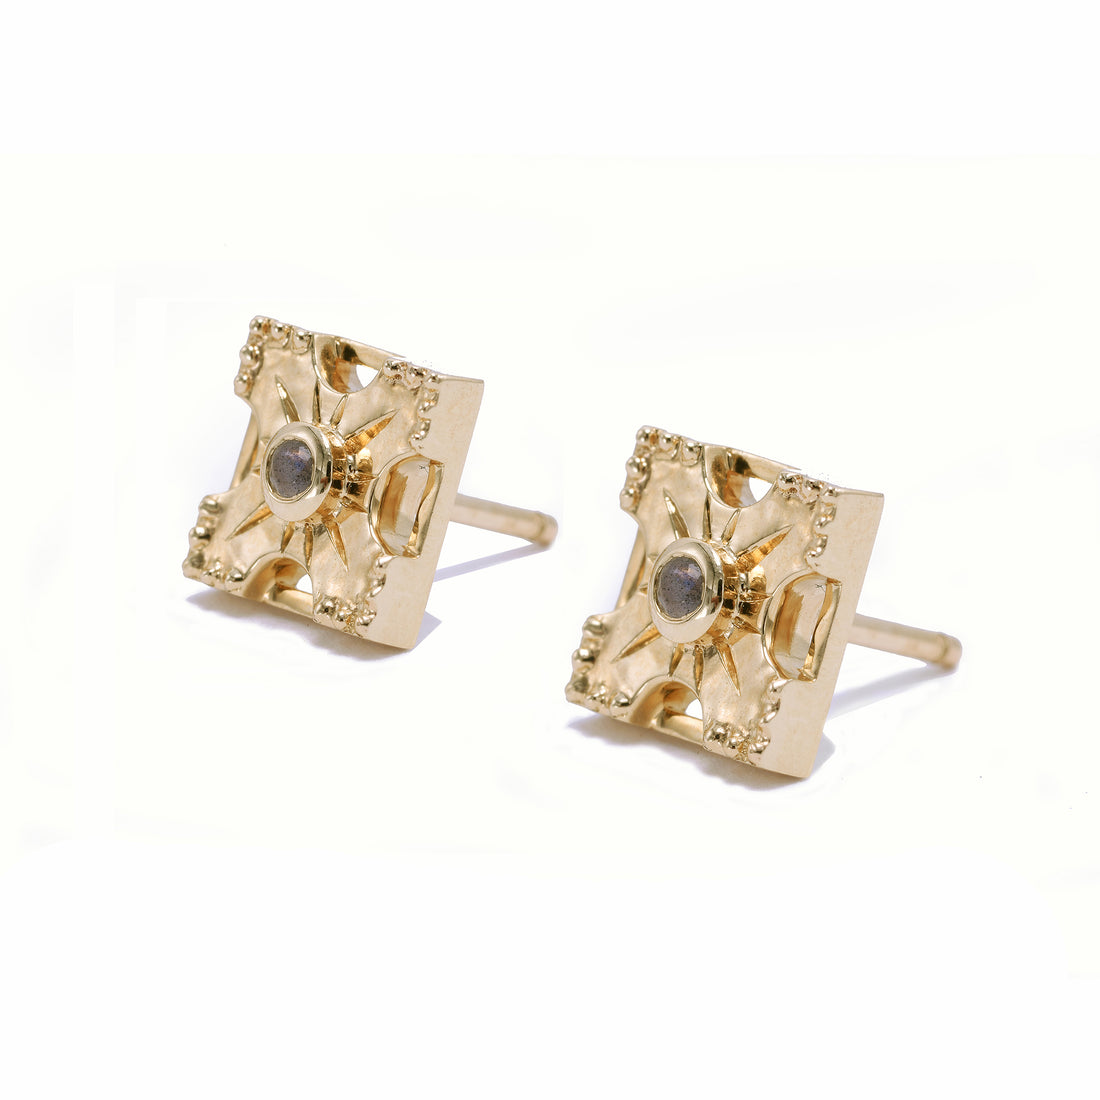 Aqua Green Stone Gold Earrrings Stud Collections Shop Online ER3888